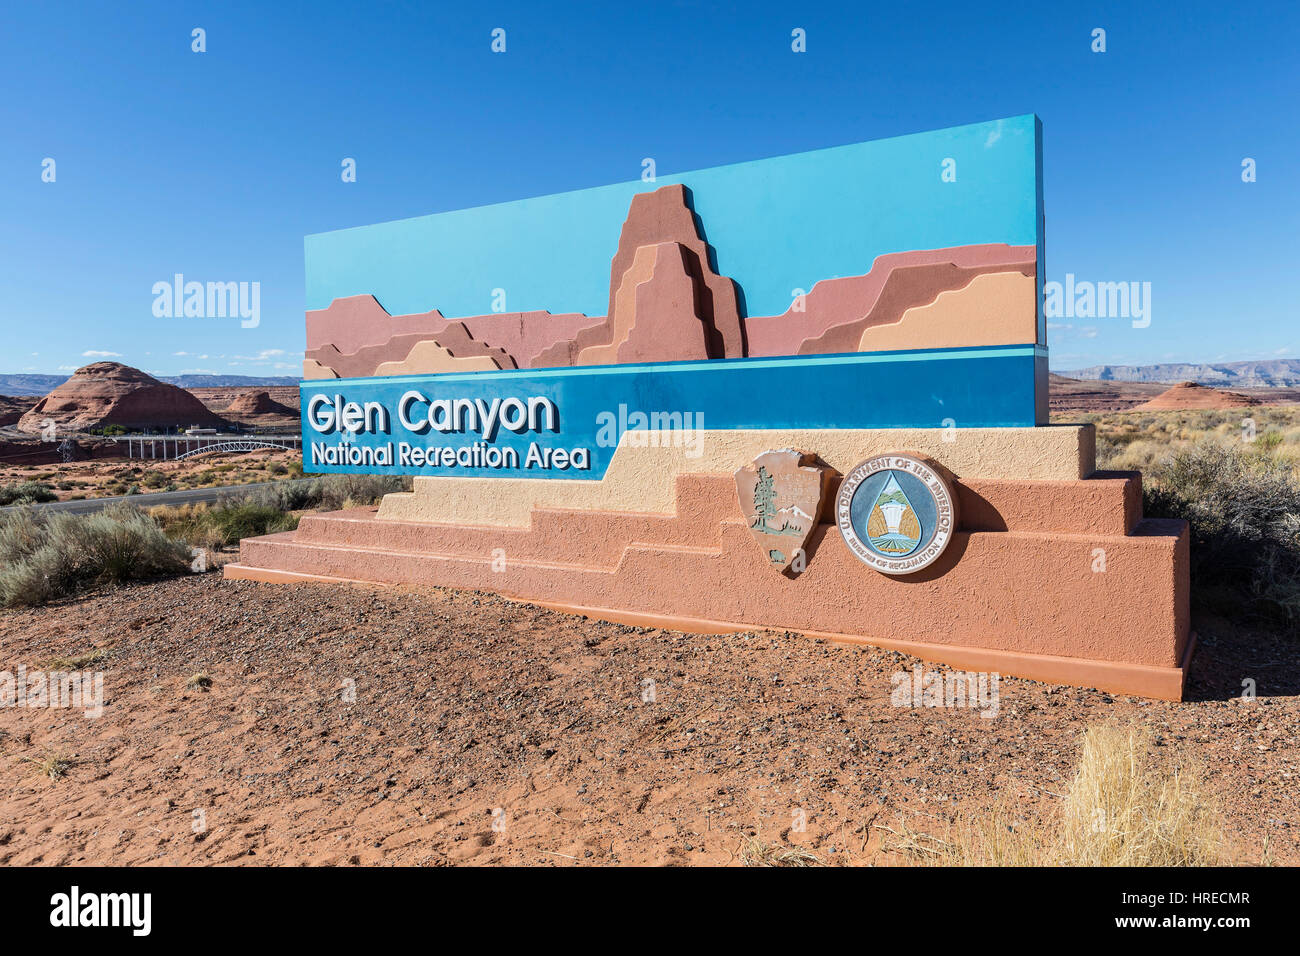 Pagina, Arizona, Stati Uniti d'America - 17 Ottobre 2016: Glen Canyon National Recreation Area ingresso sign in Northern Arizona. Foto Stock